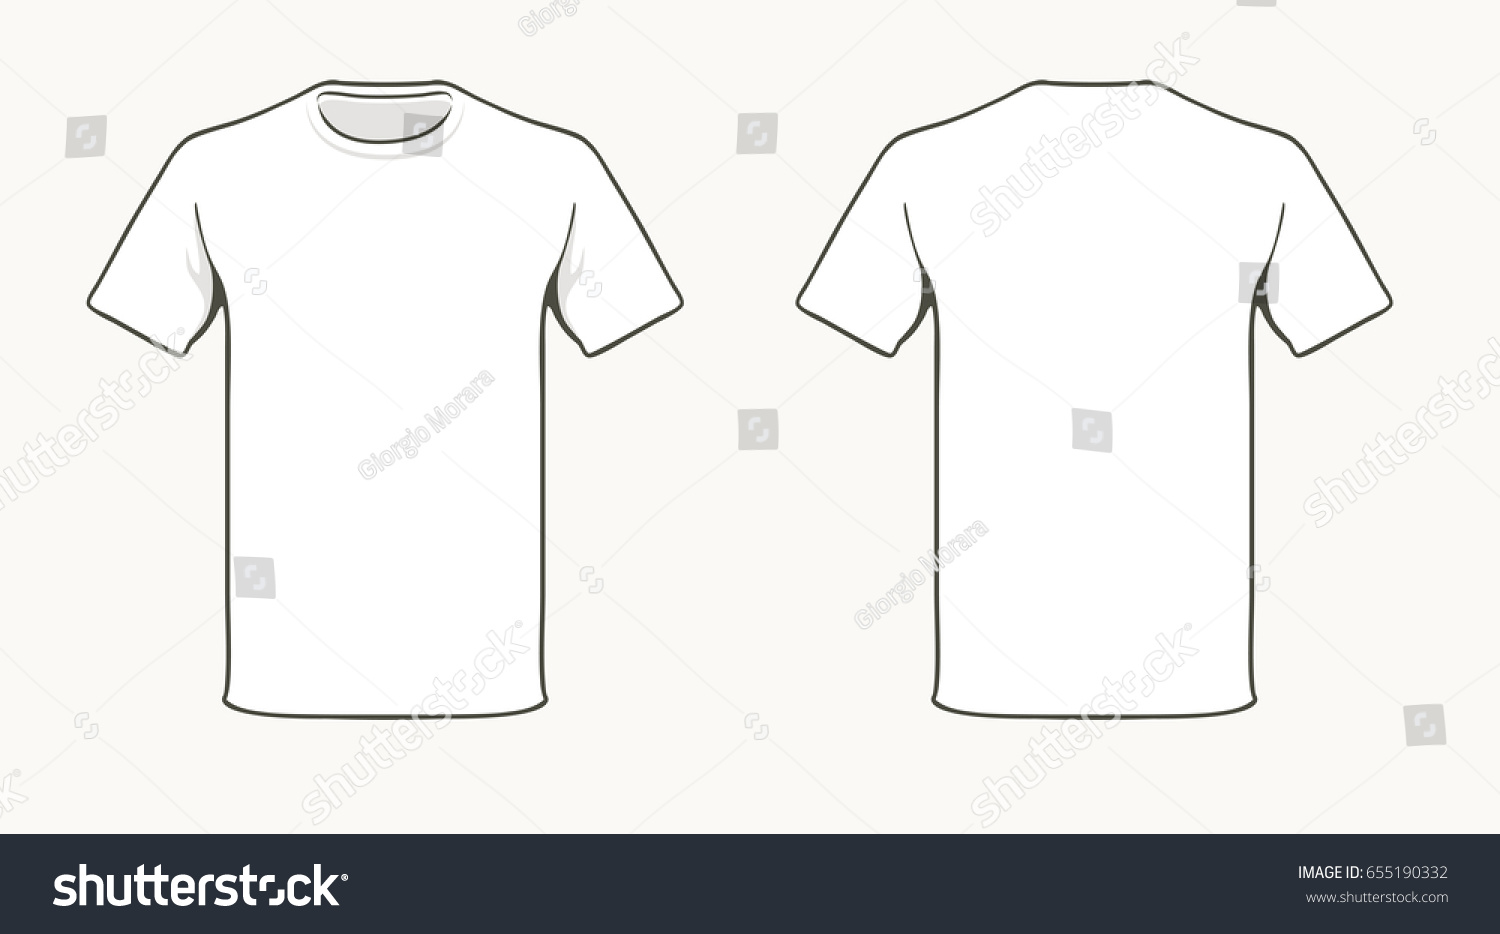 Blank white T-shirt template.  #655190332